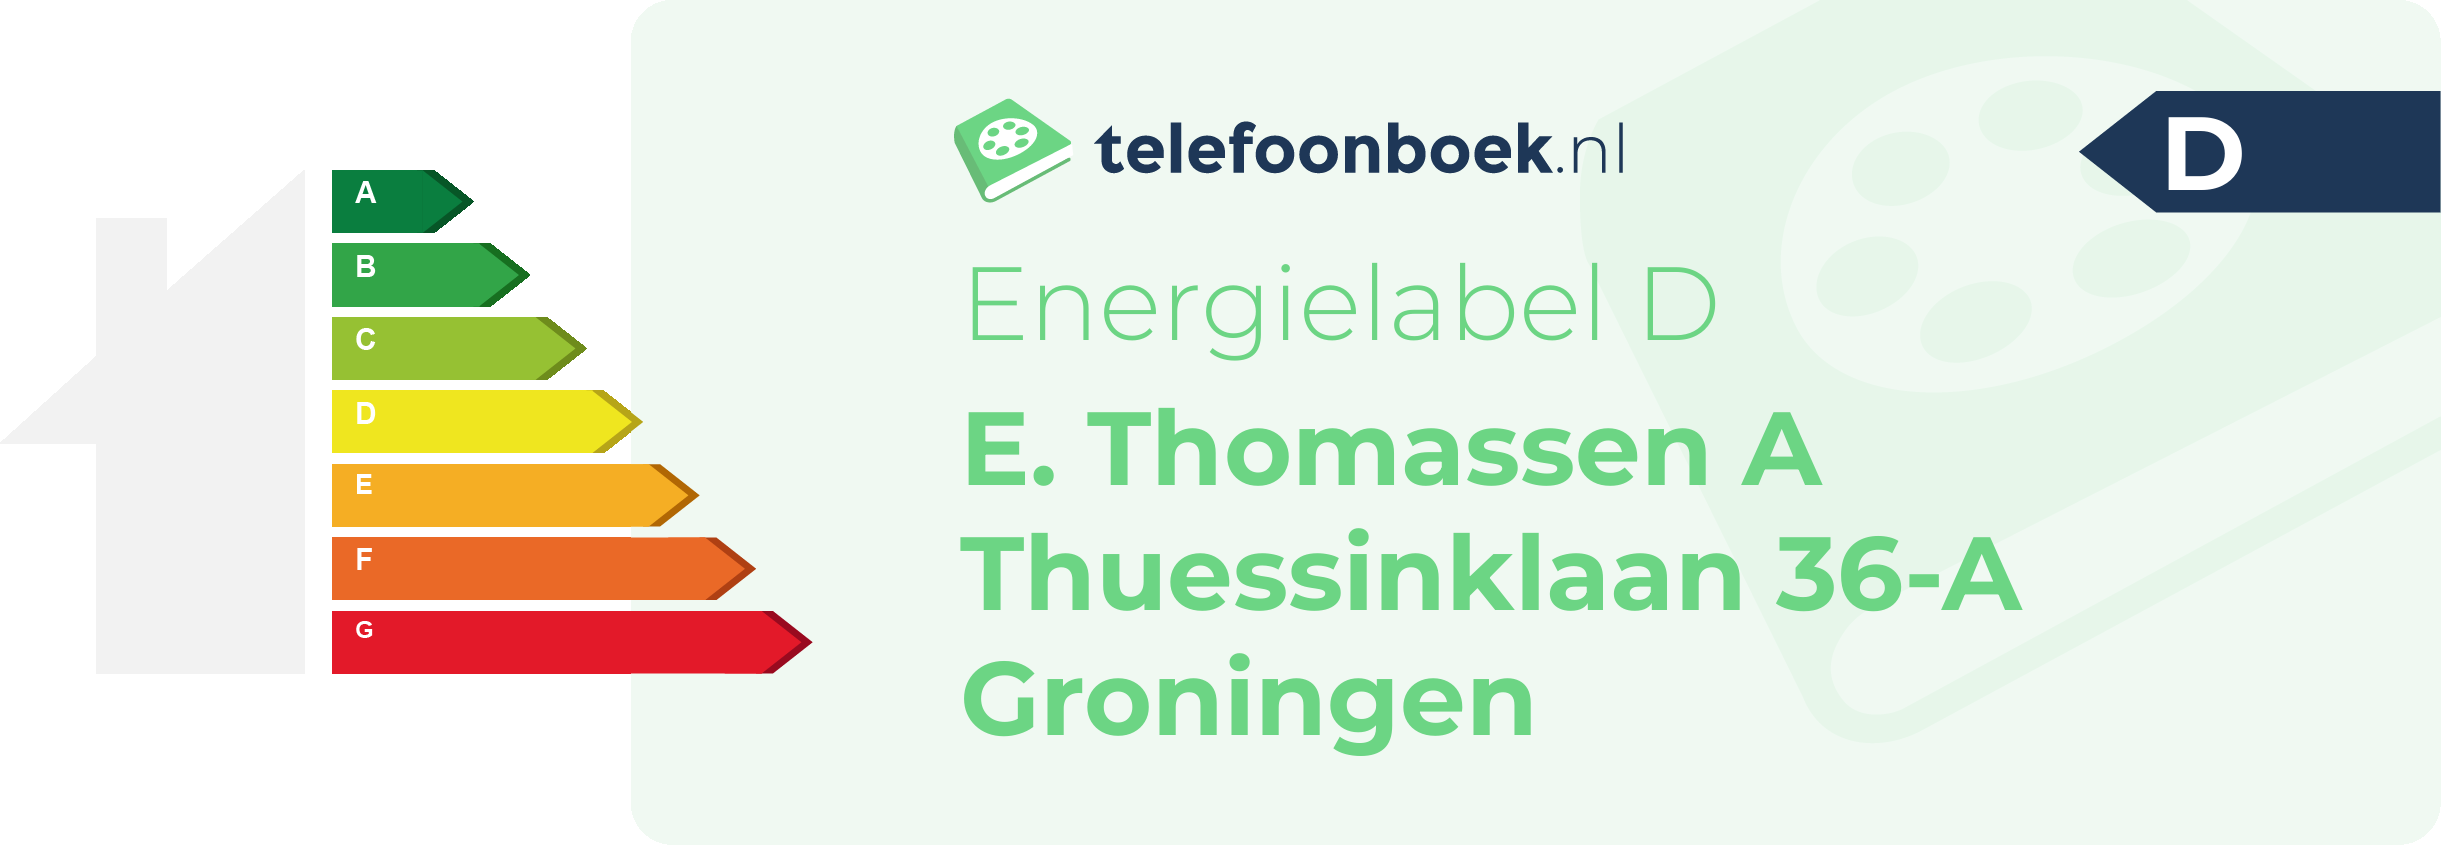 Energielabel E. Thomassen A Thuessinklaan 36-A Groningen